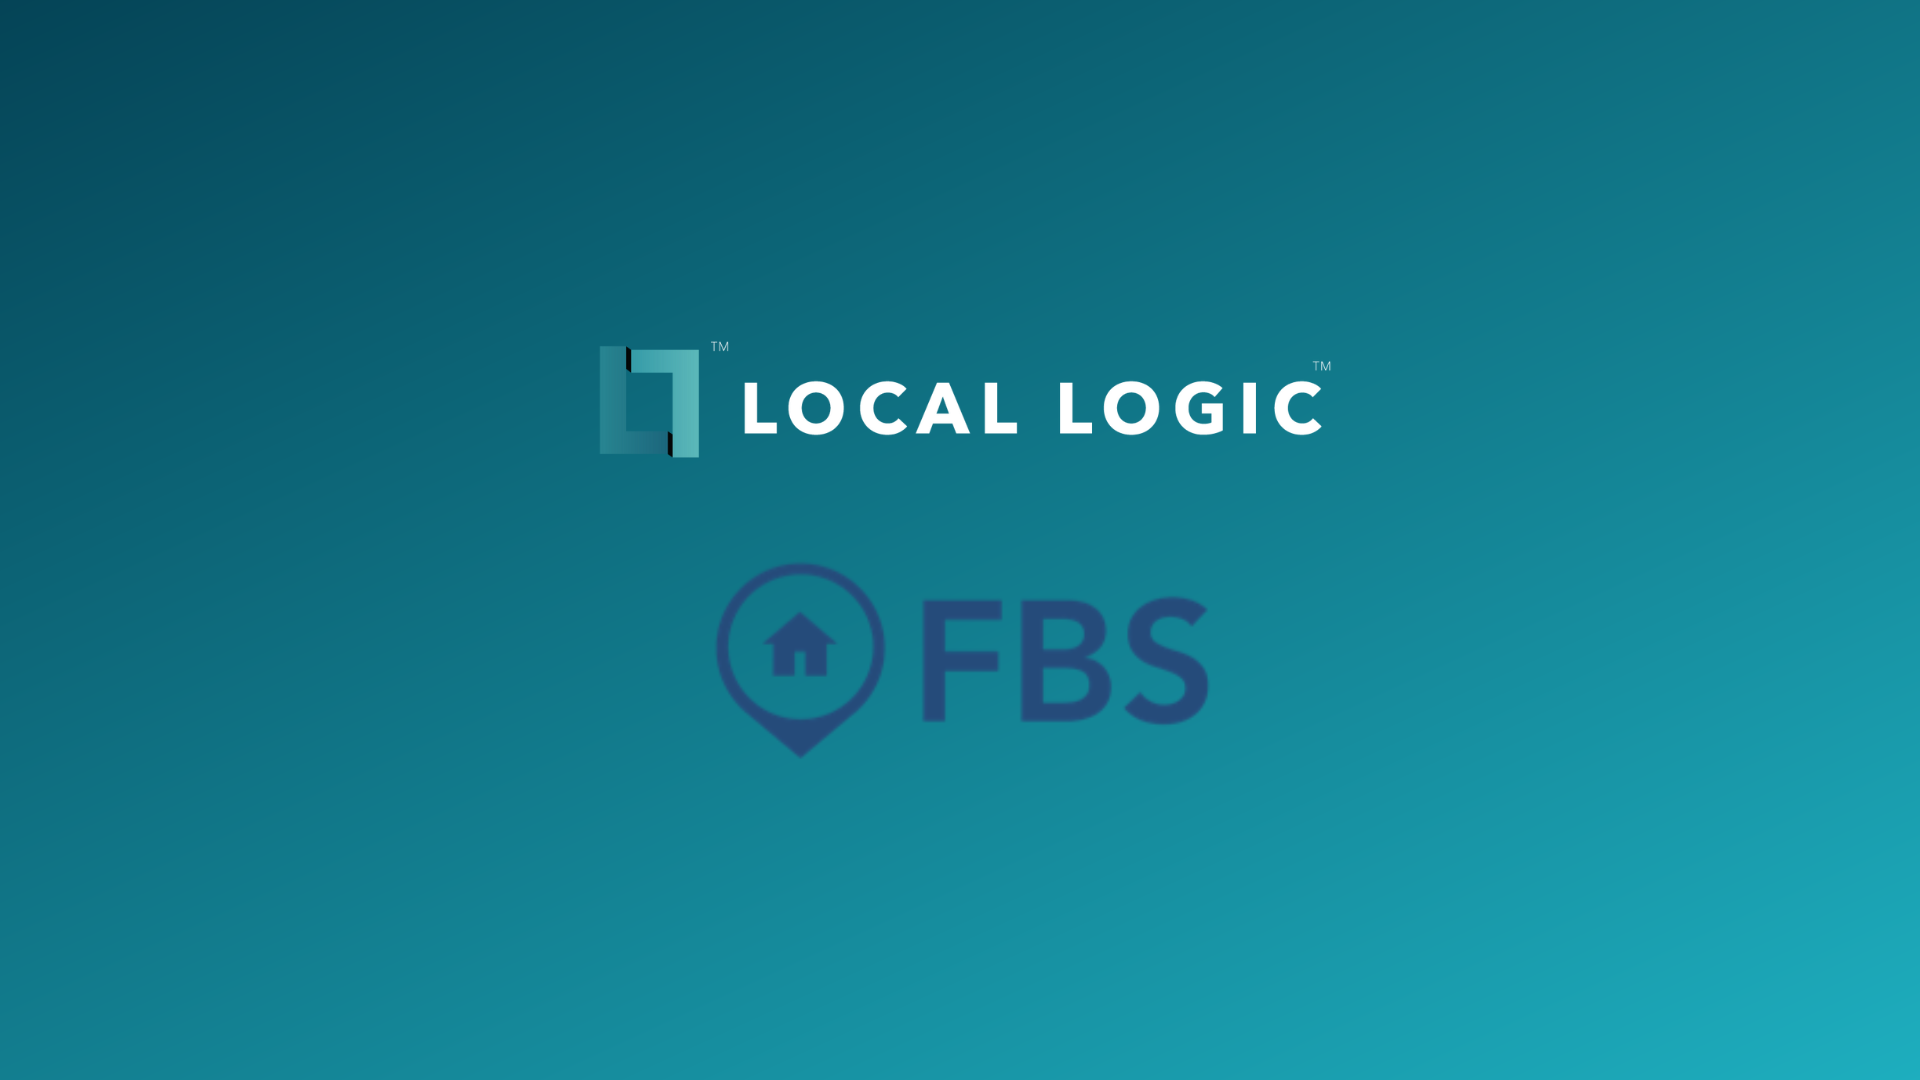 Local Logic logo and RBS logo to announce partnership